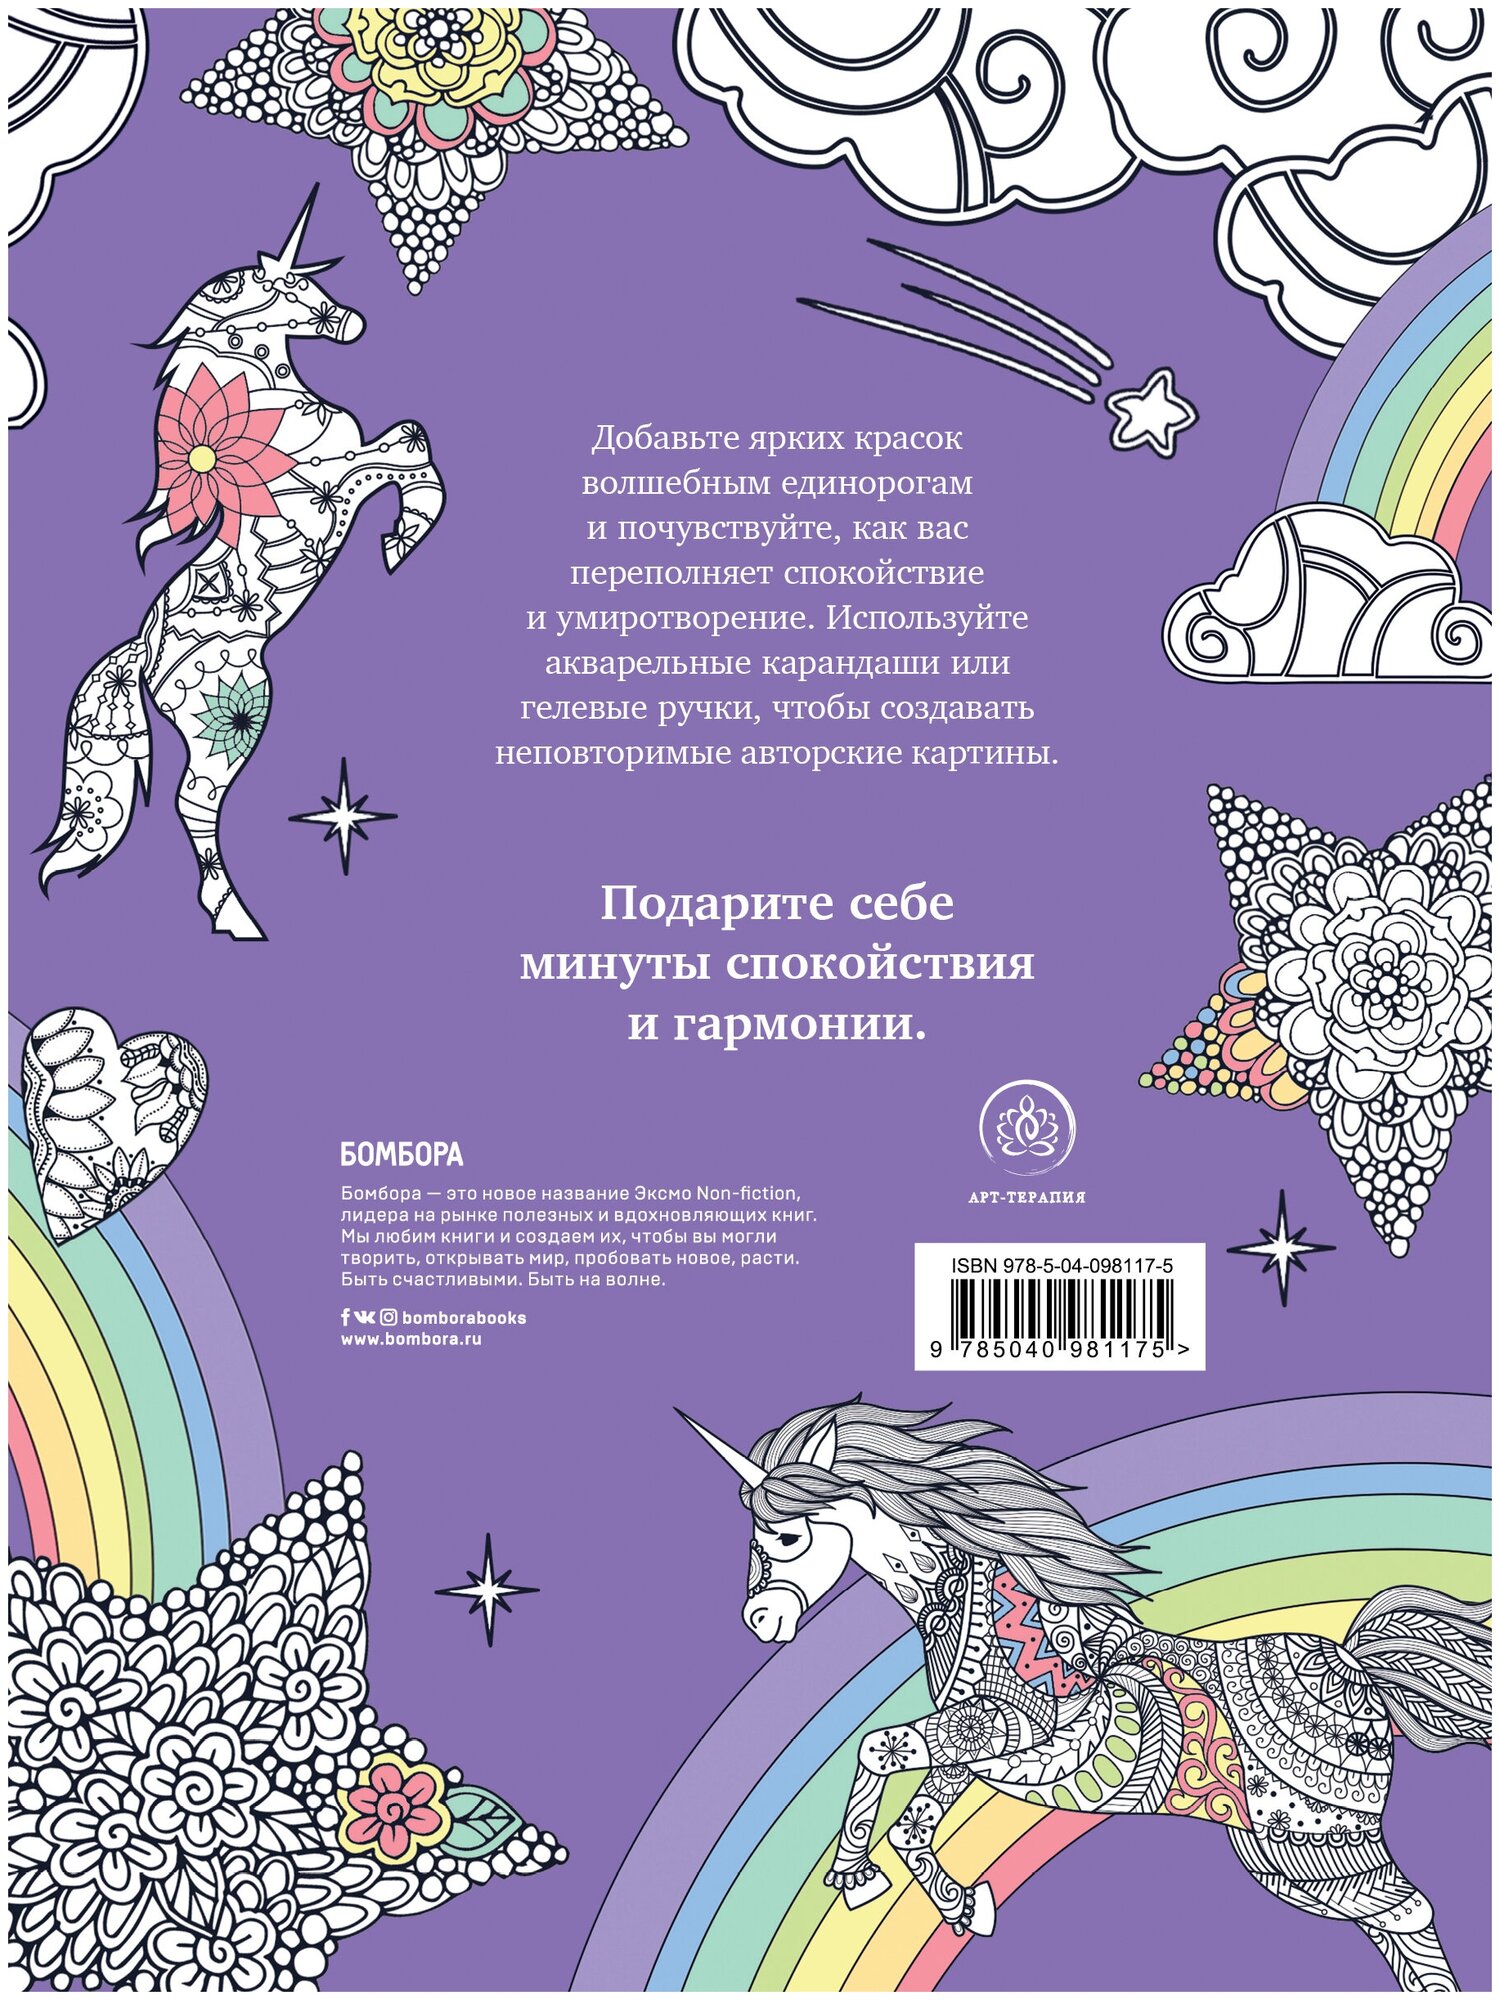 Keep calm and color unicorns (Попова А. (переводчик), Расторгуева М. (редактор)) - фото №2